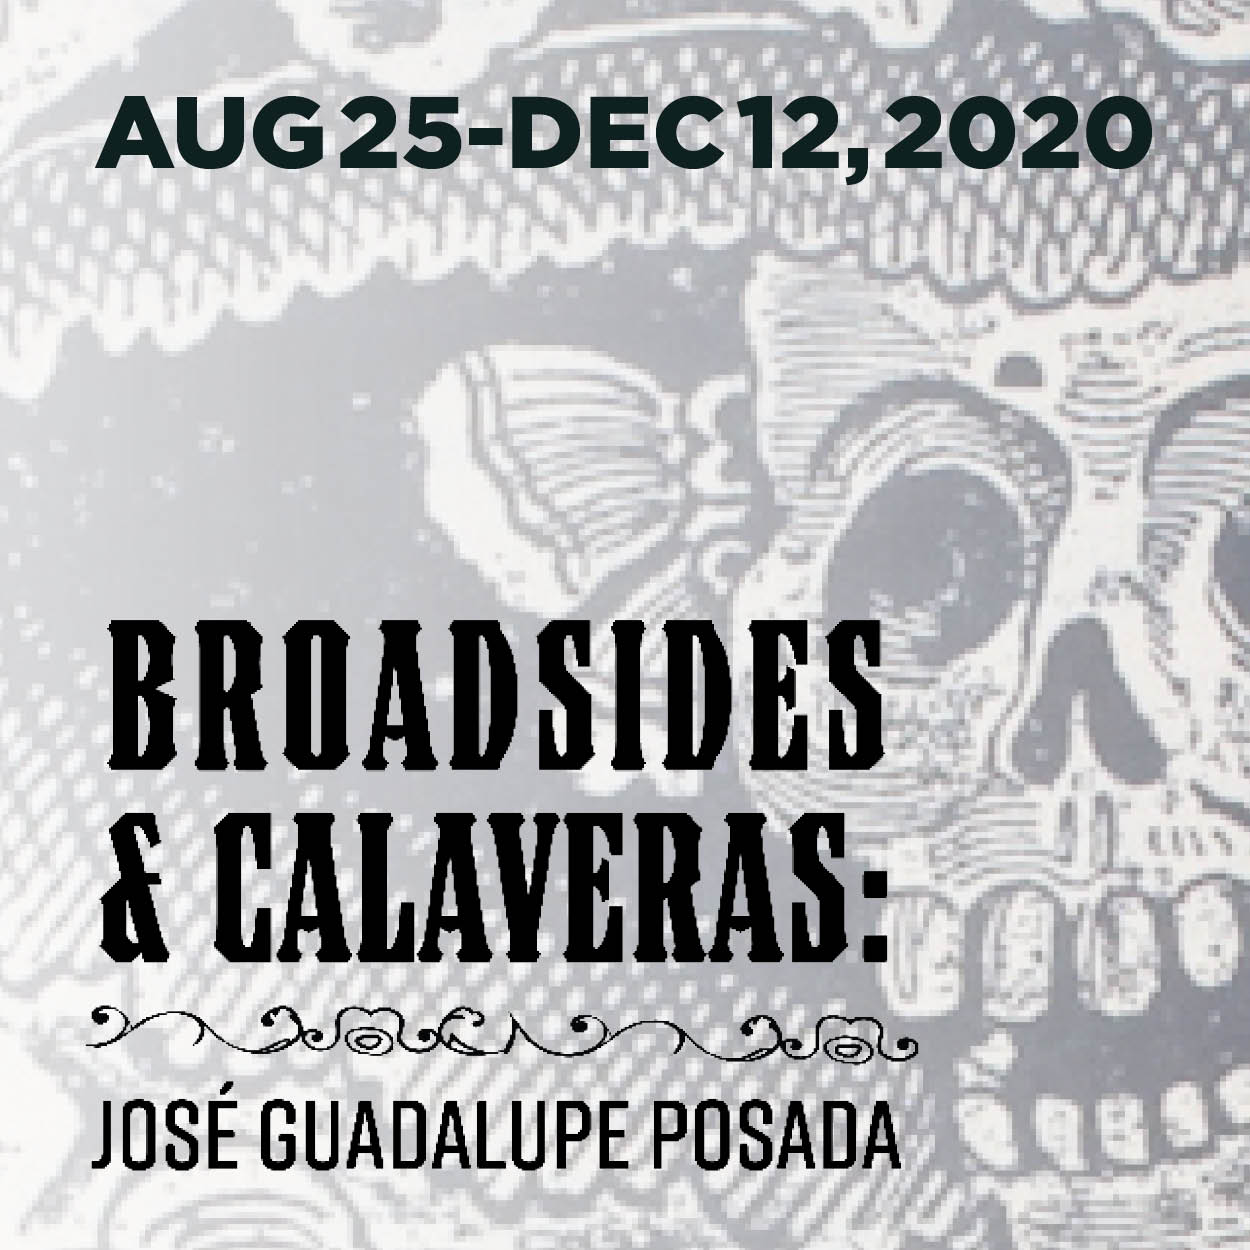 Broadsides & Calaveras August 25-December 12, 2020